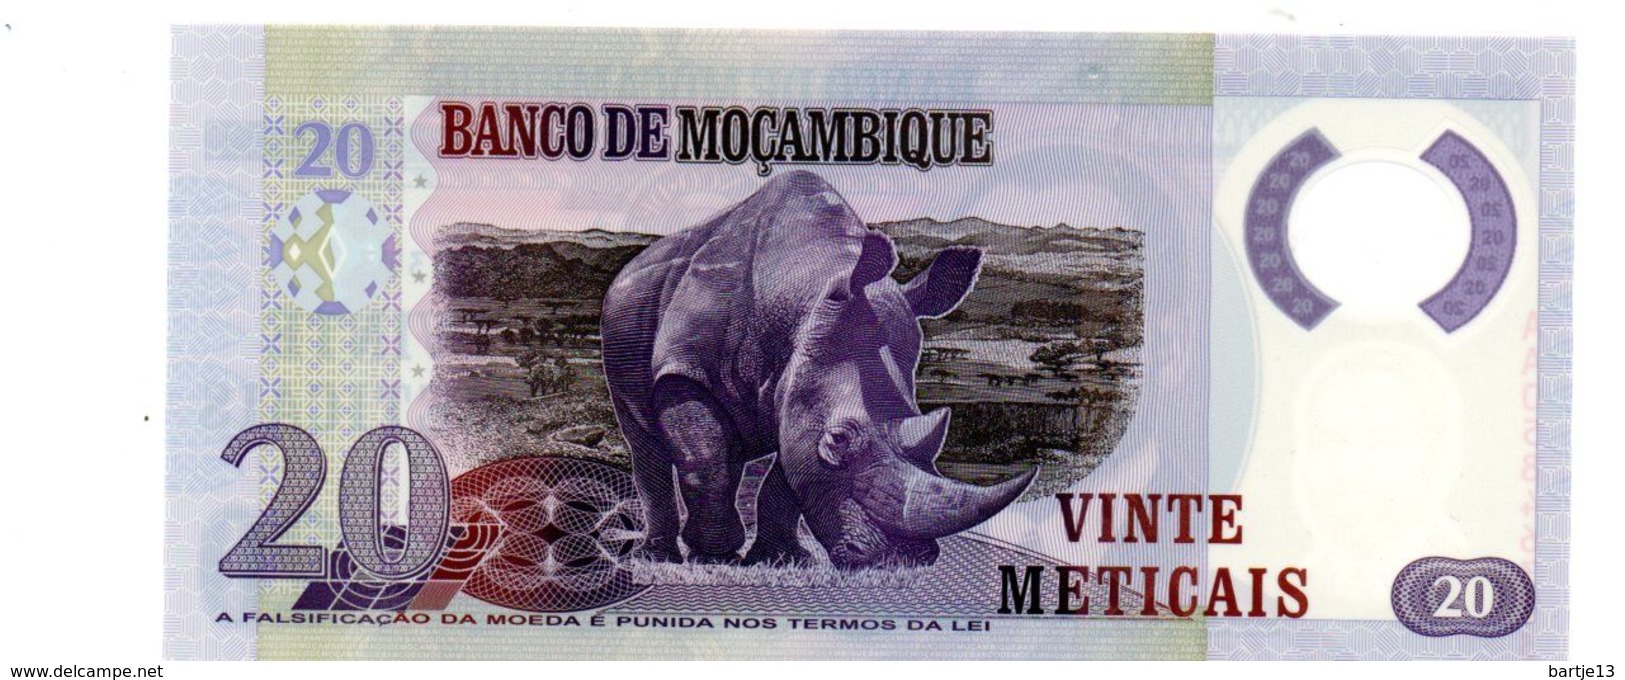 MOZAMBIQUE 20 METICAIS PICK 149 UNCIRCULATED POLYMEER - Mozambique